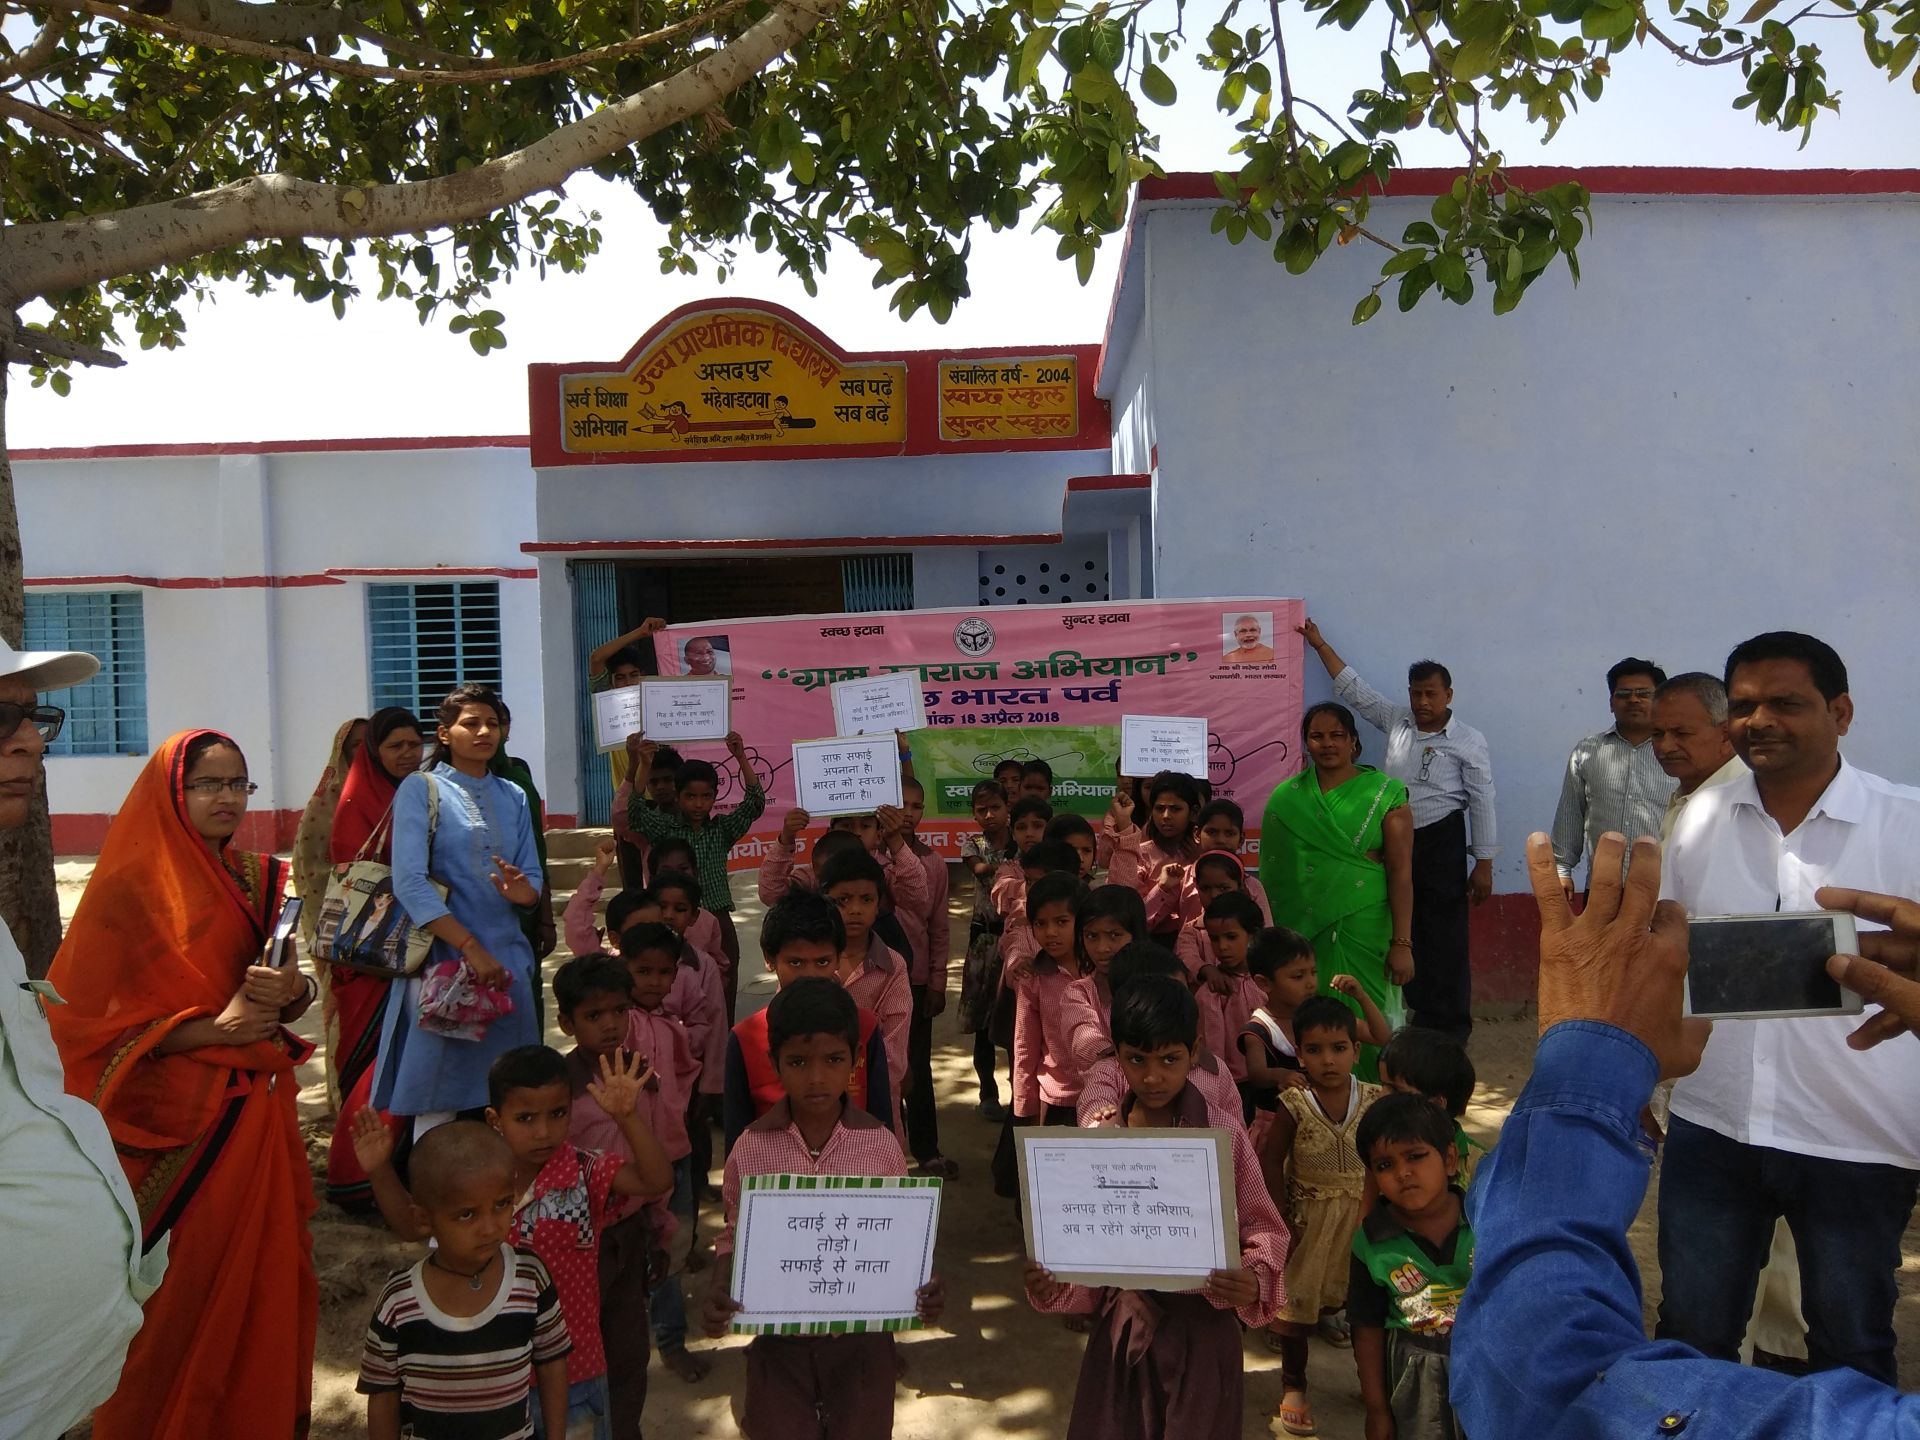 Awareness raising event on school sanitation. (Image: Divyanshu Seth)